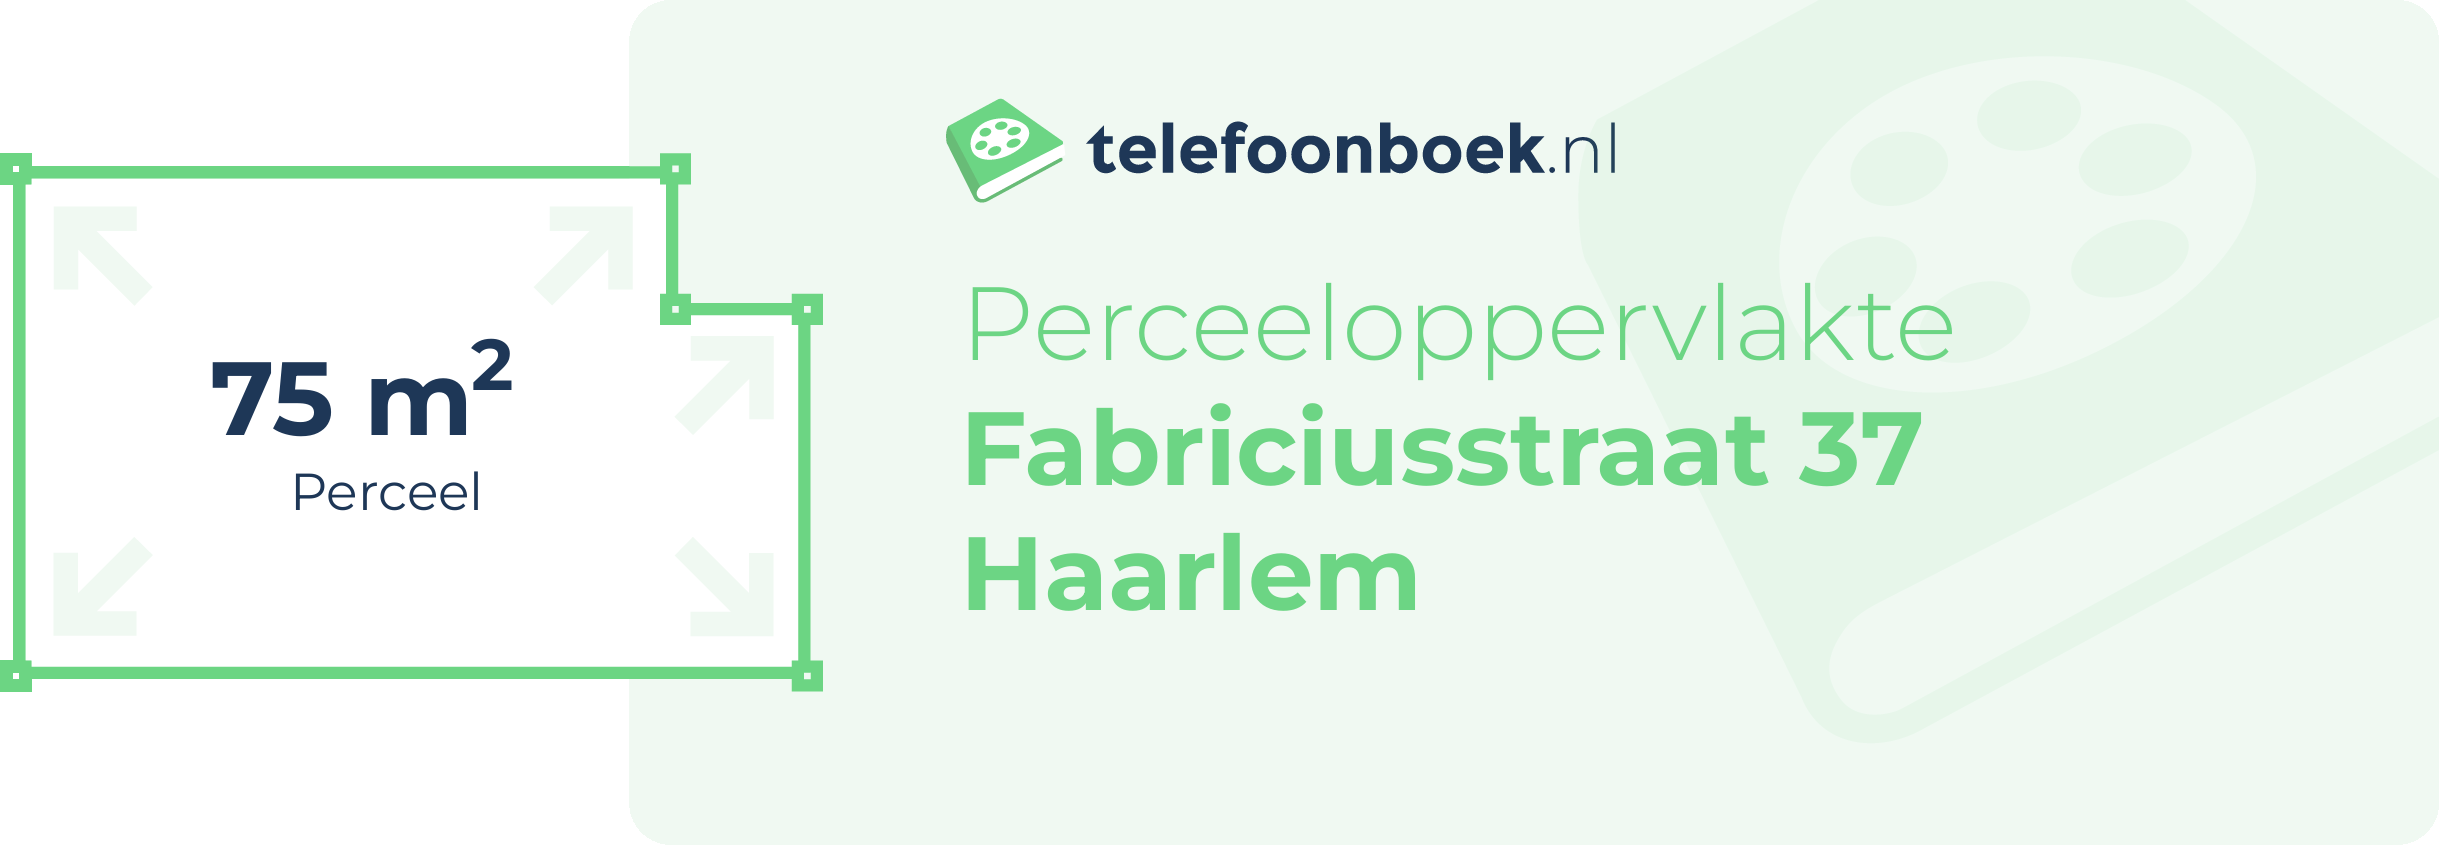 Perceeloppervlakte Fabriciusstraat 37 Haarlem